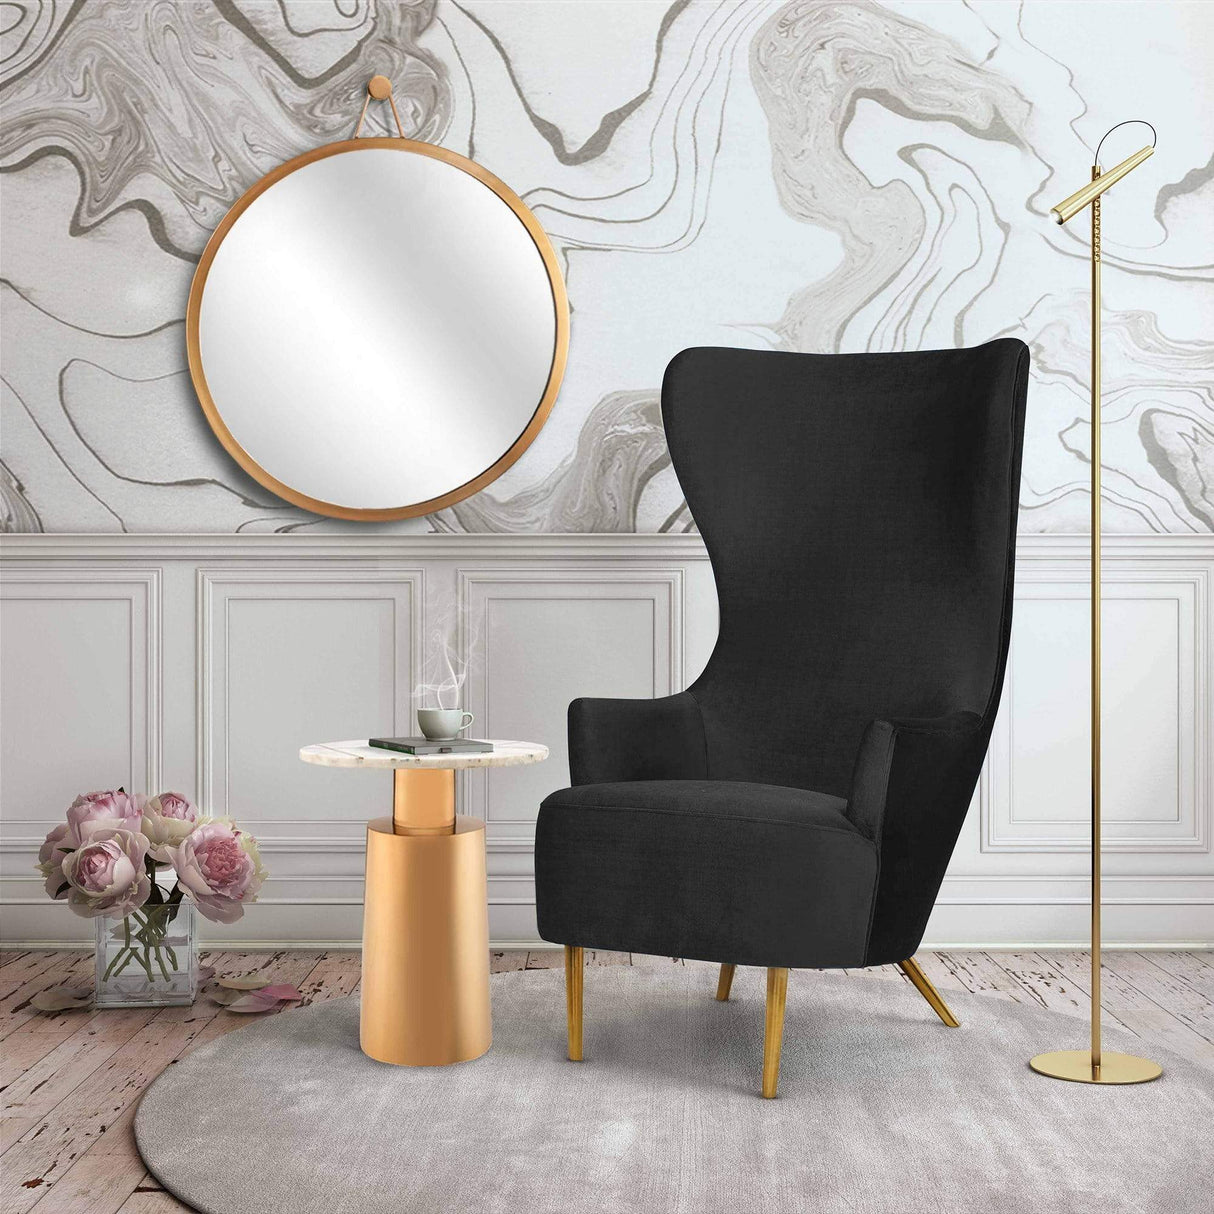 Candelabra Home Julia Velvet Wingback Chair By Inspire Me! Home Decor Furniture